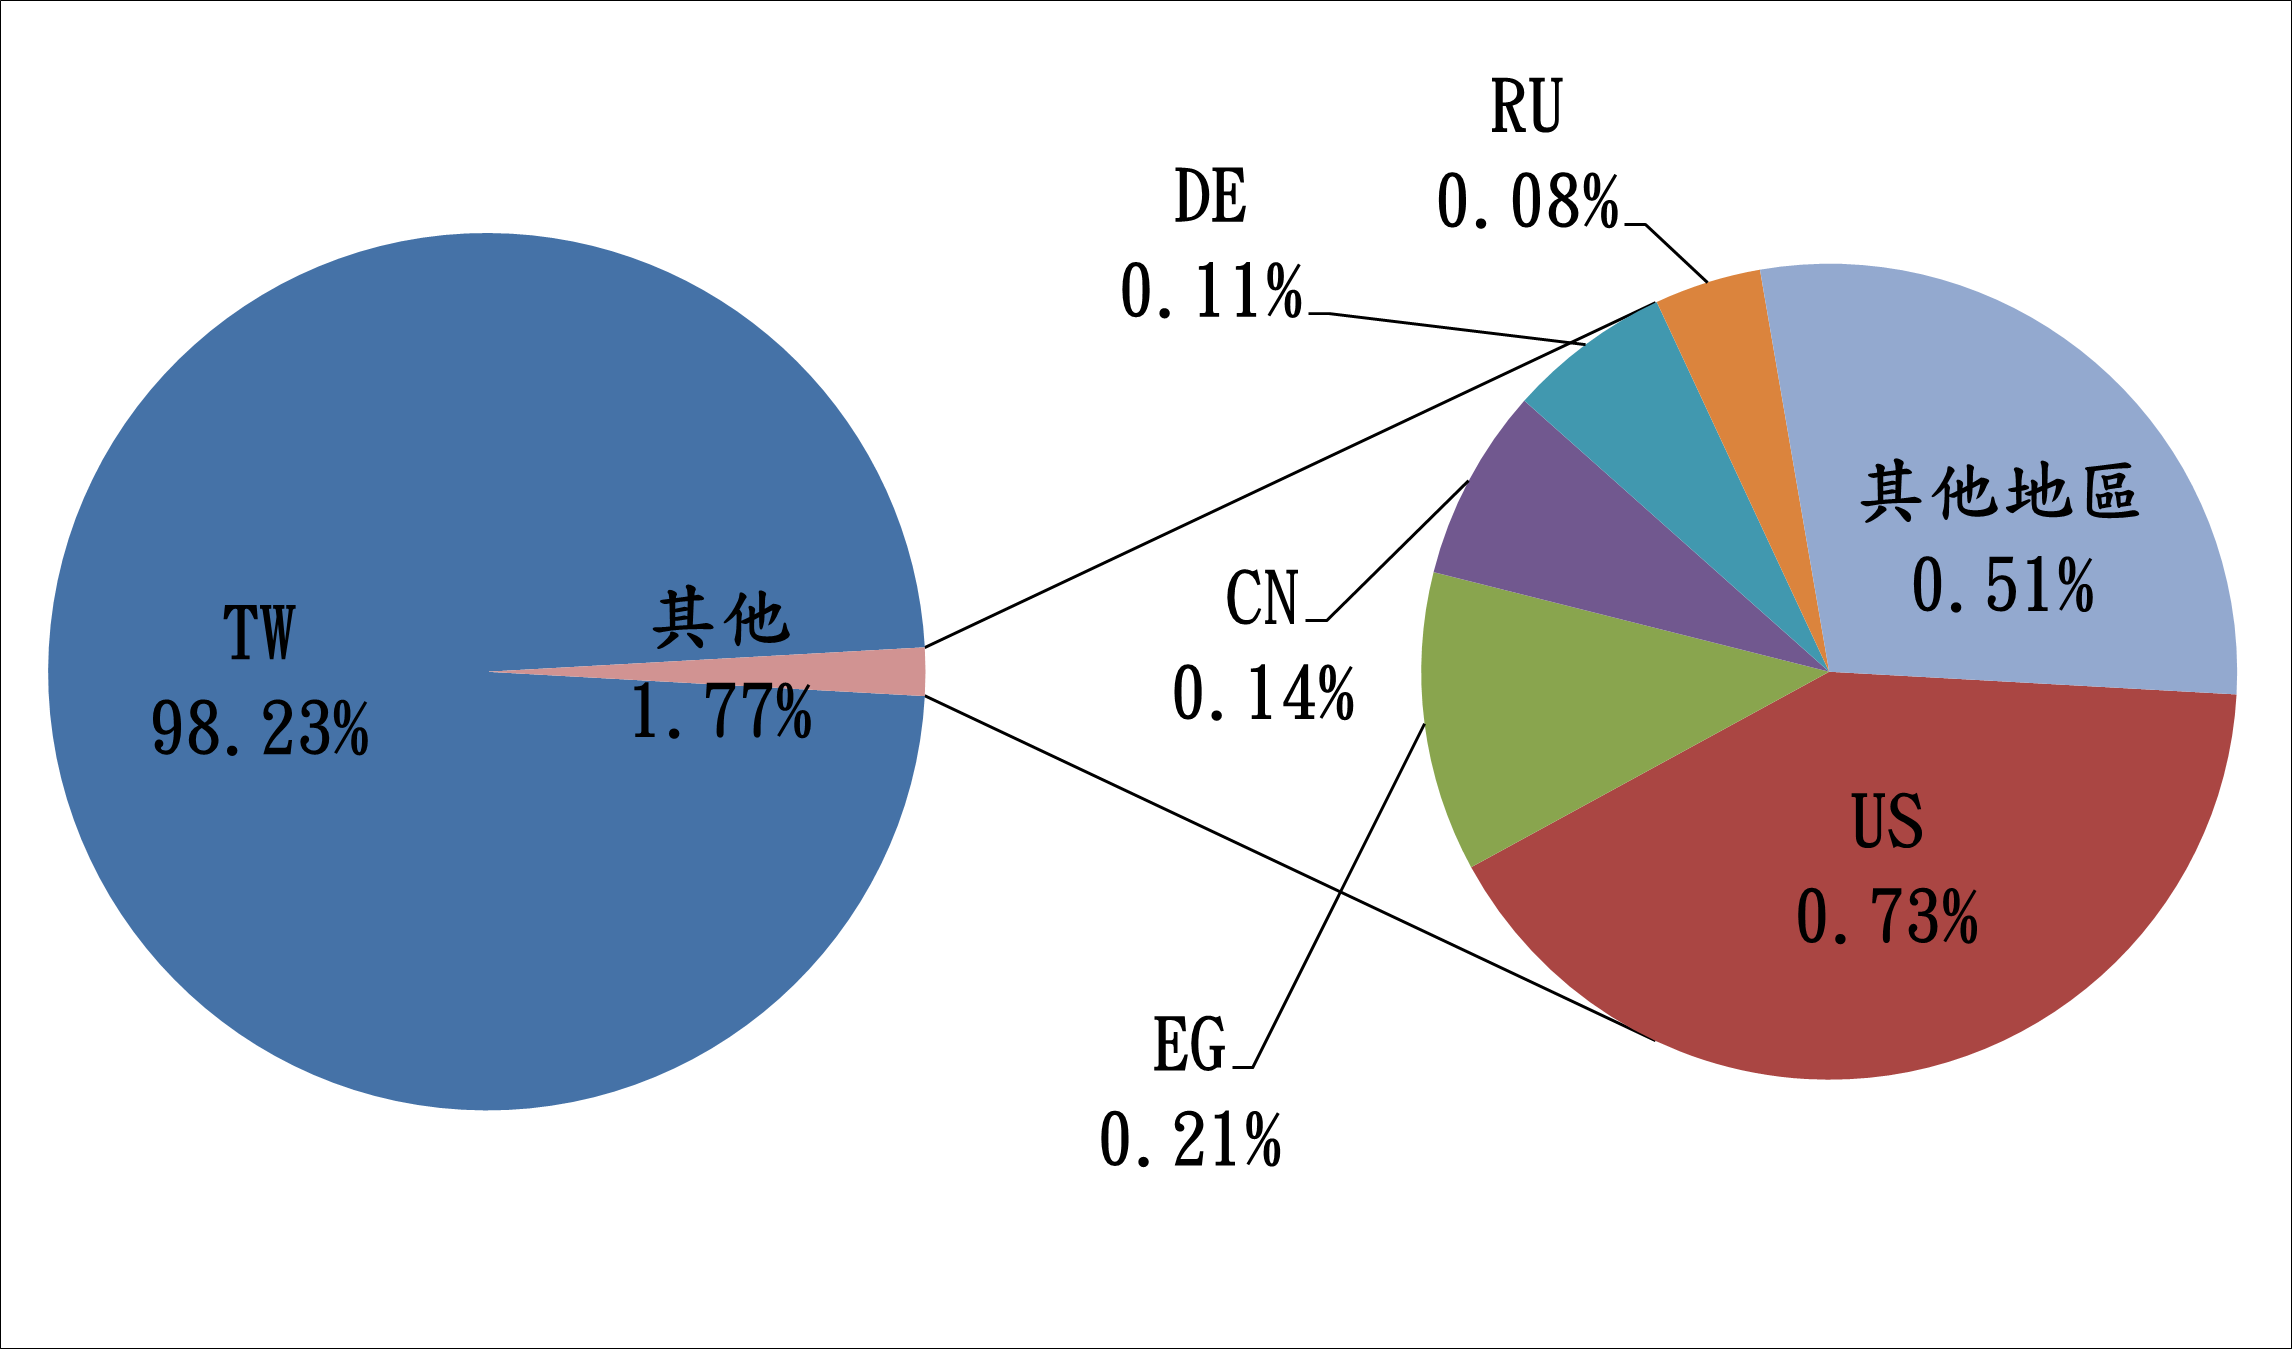 TW98.23% 其他1.77% RU0.08% DE0.11% CN0.14% EG0.21% US0.73% 其他地區0.73%